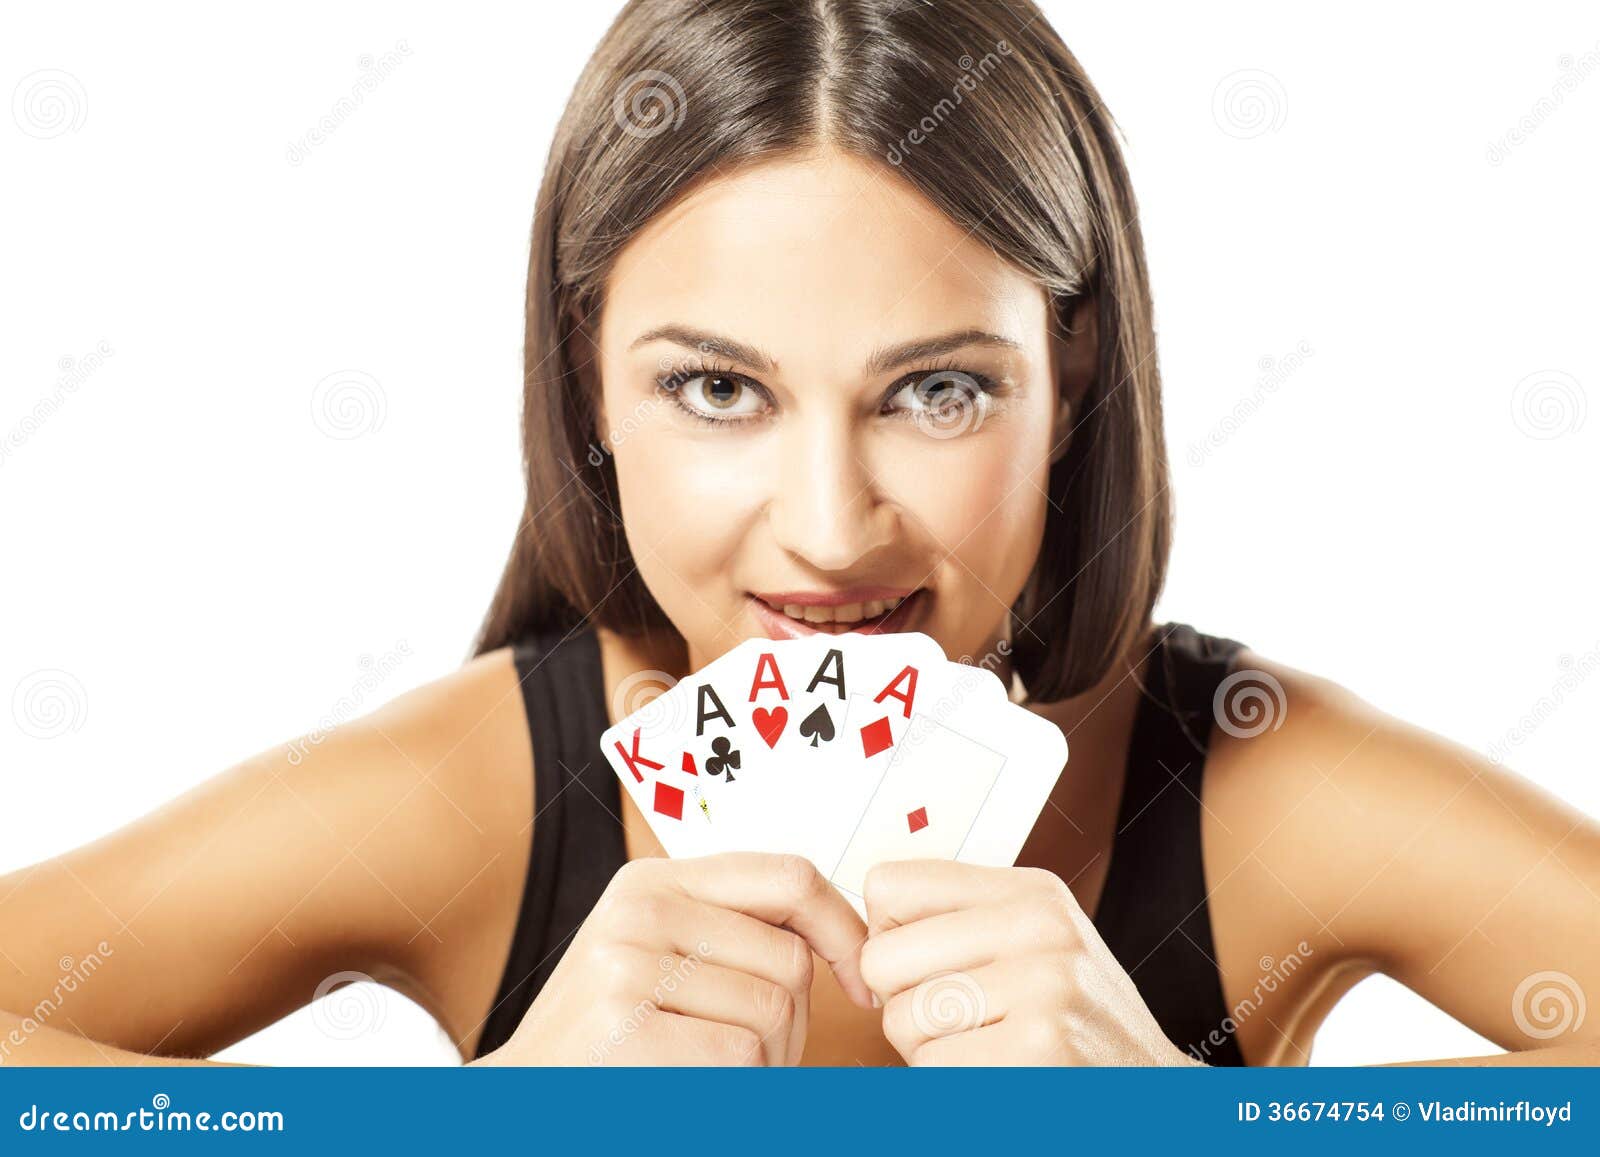 my-win-happy-attractive-girl-holding-winning-combination-poker-cards-36674754.jpg